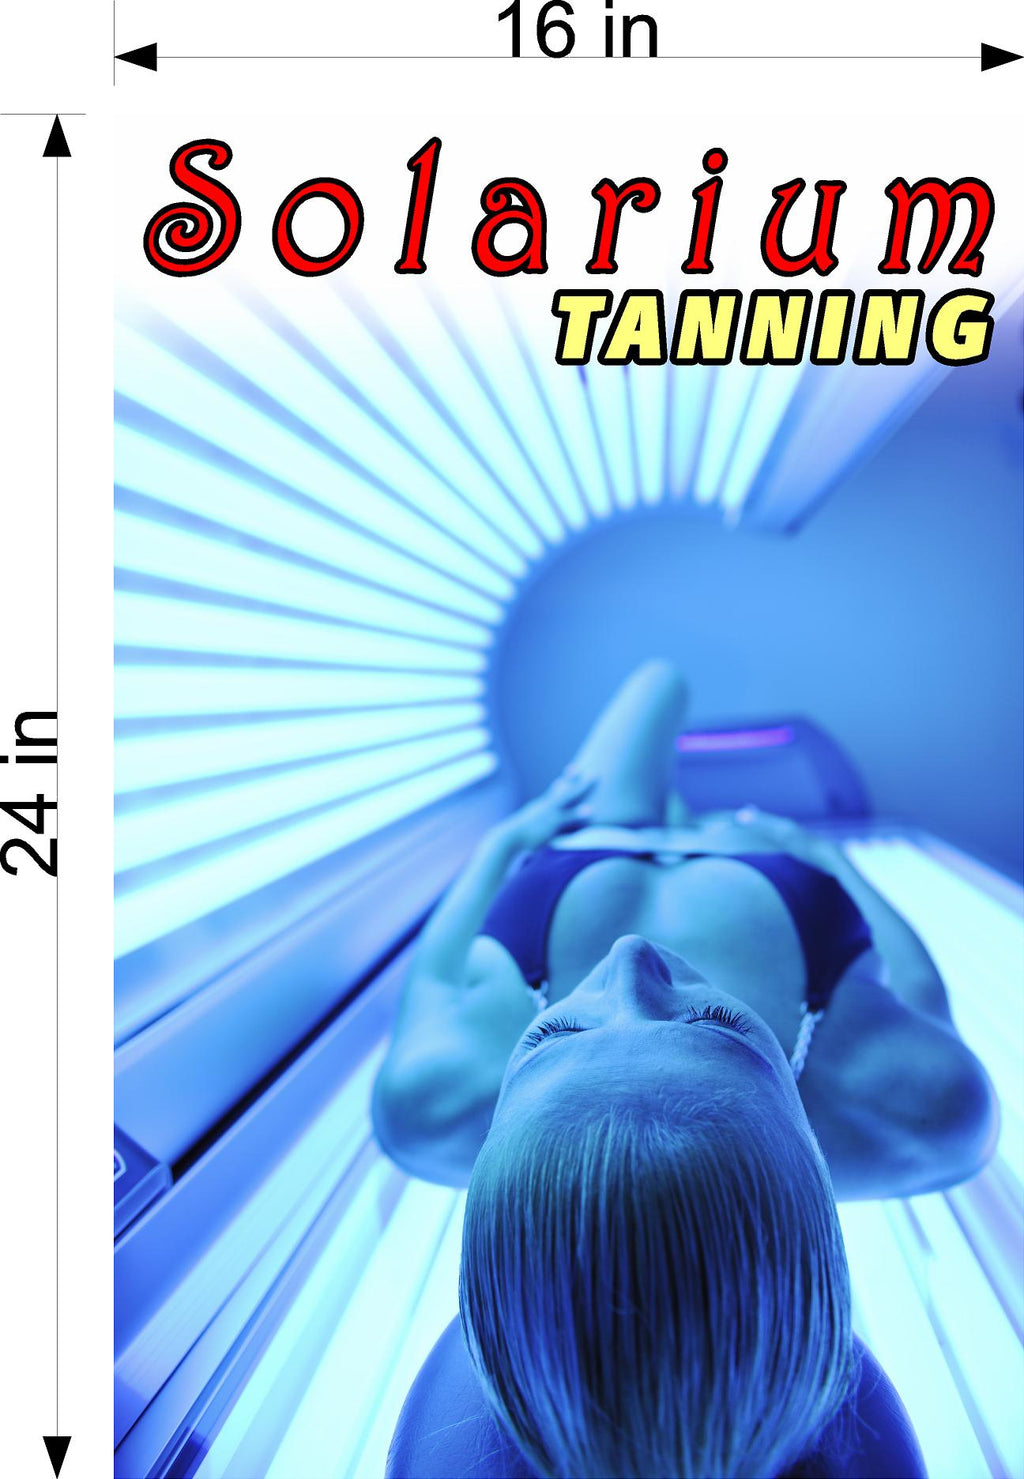 Tanning 02 Perforated Mesh One Way Vision Window Vinyl Nail Salon See-Through Sign Solarium Spray Sun Vertical